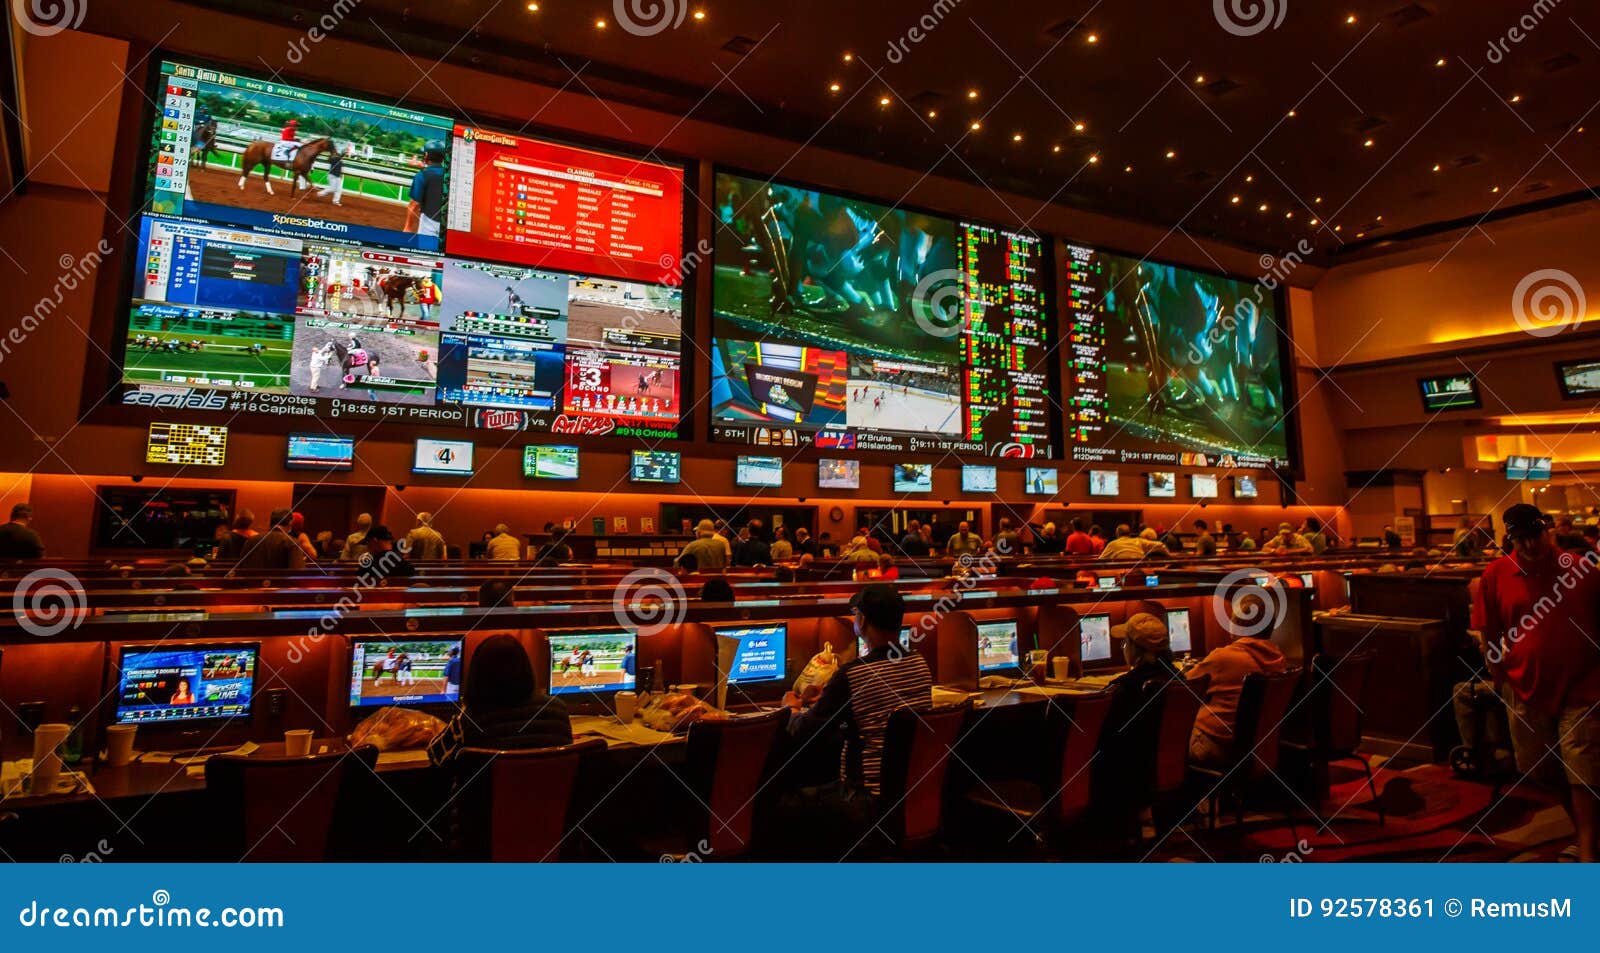 gold coast casino sports betting